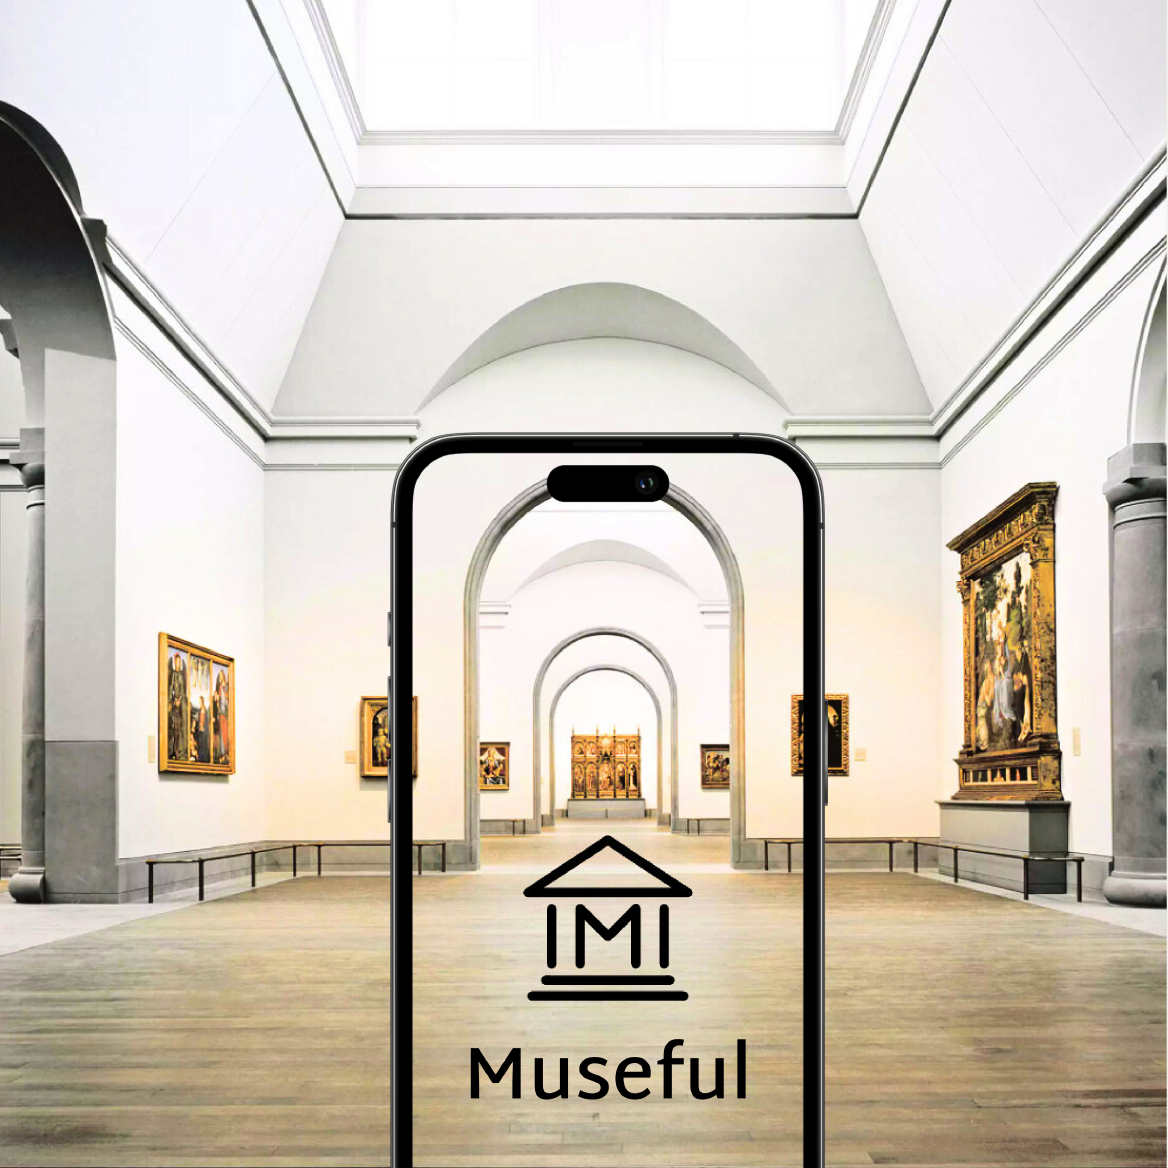 Museumsapp Museful